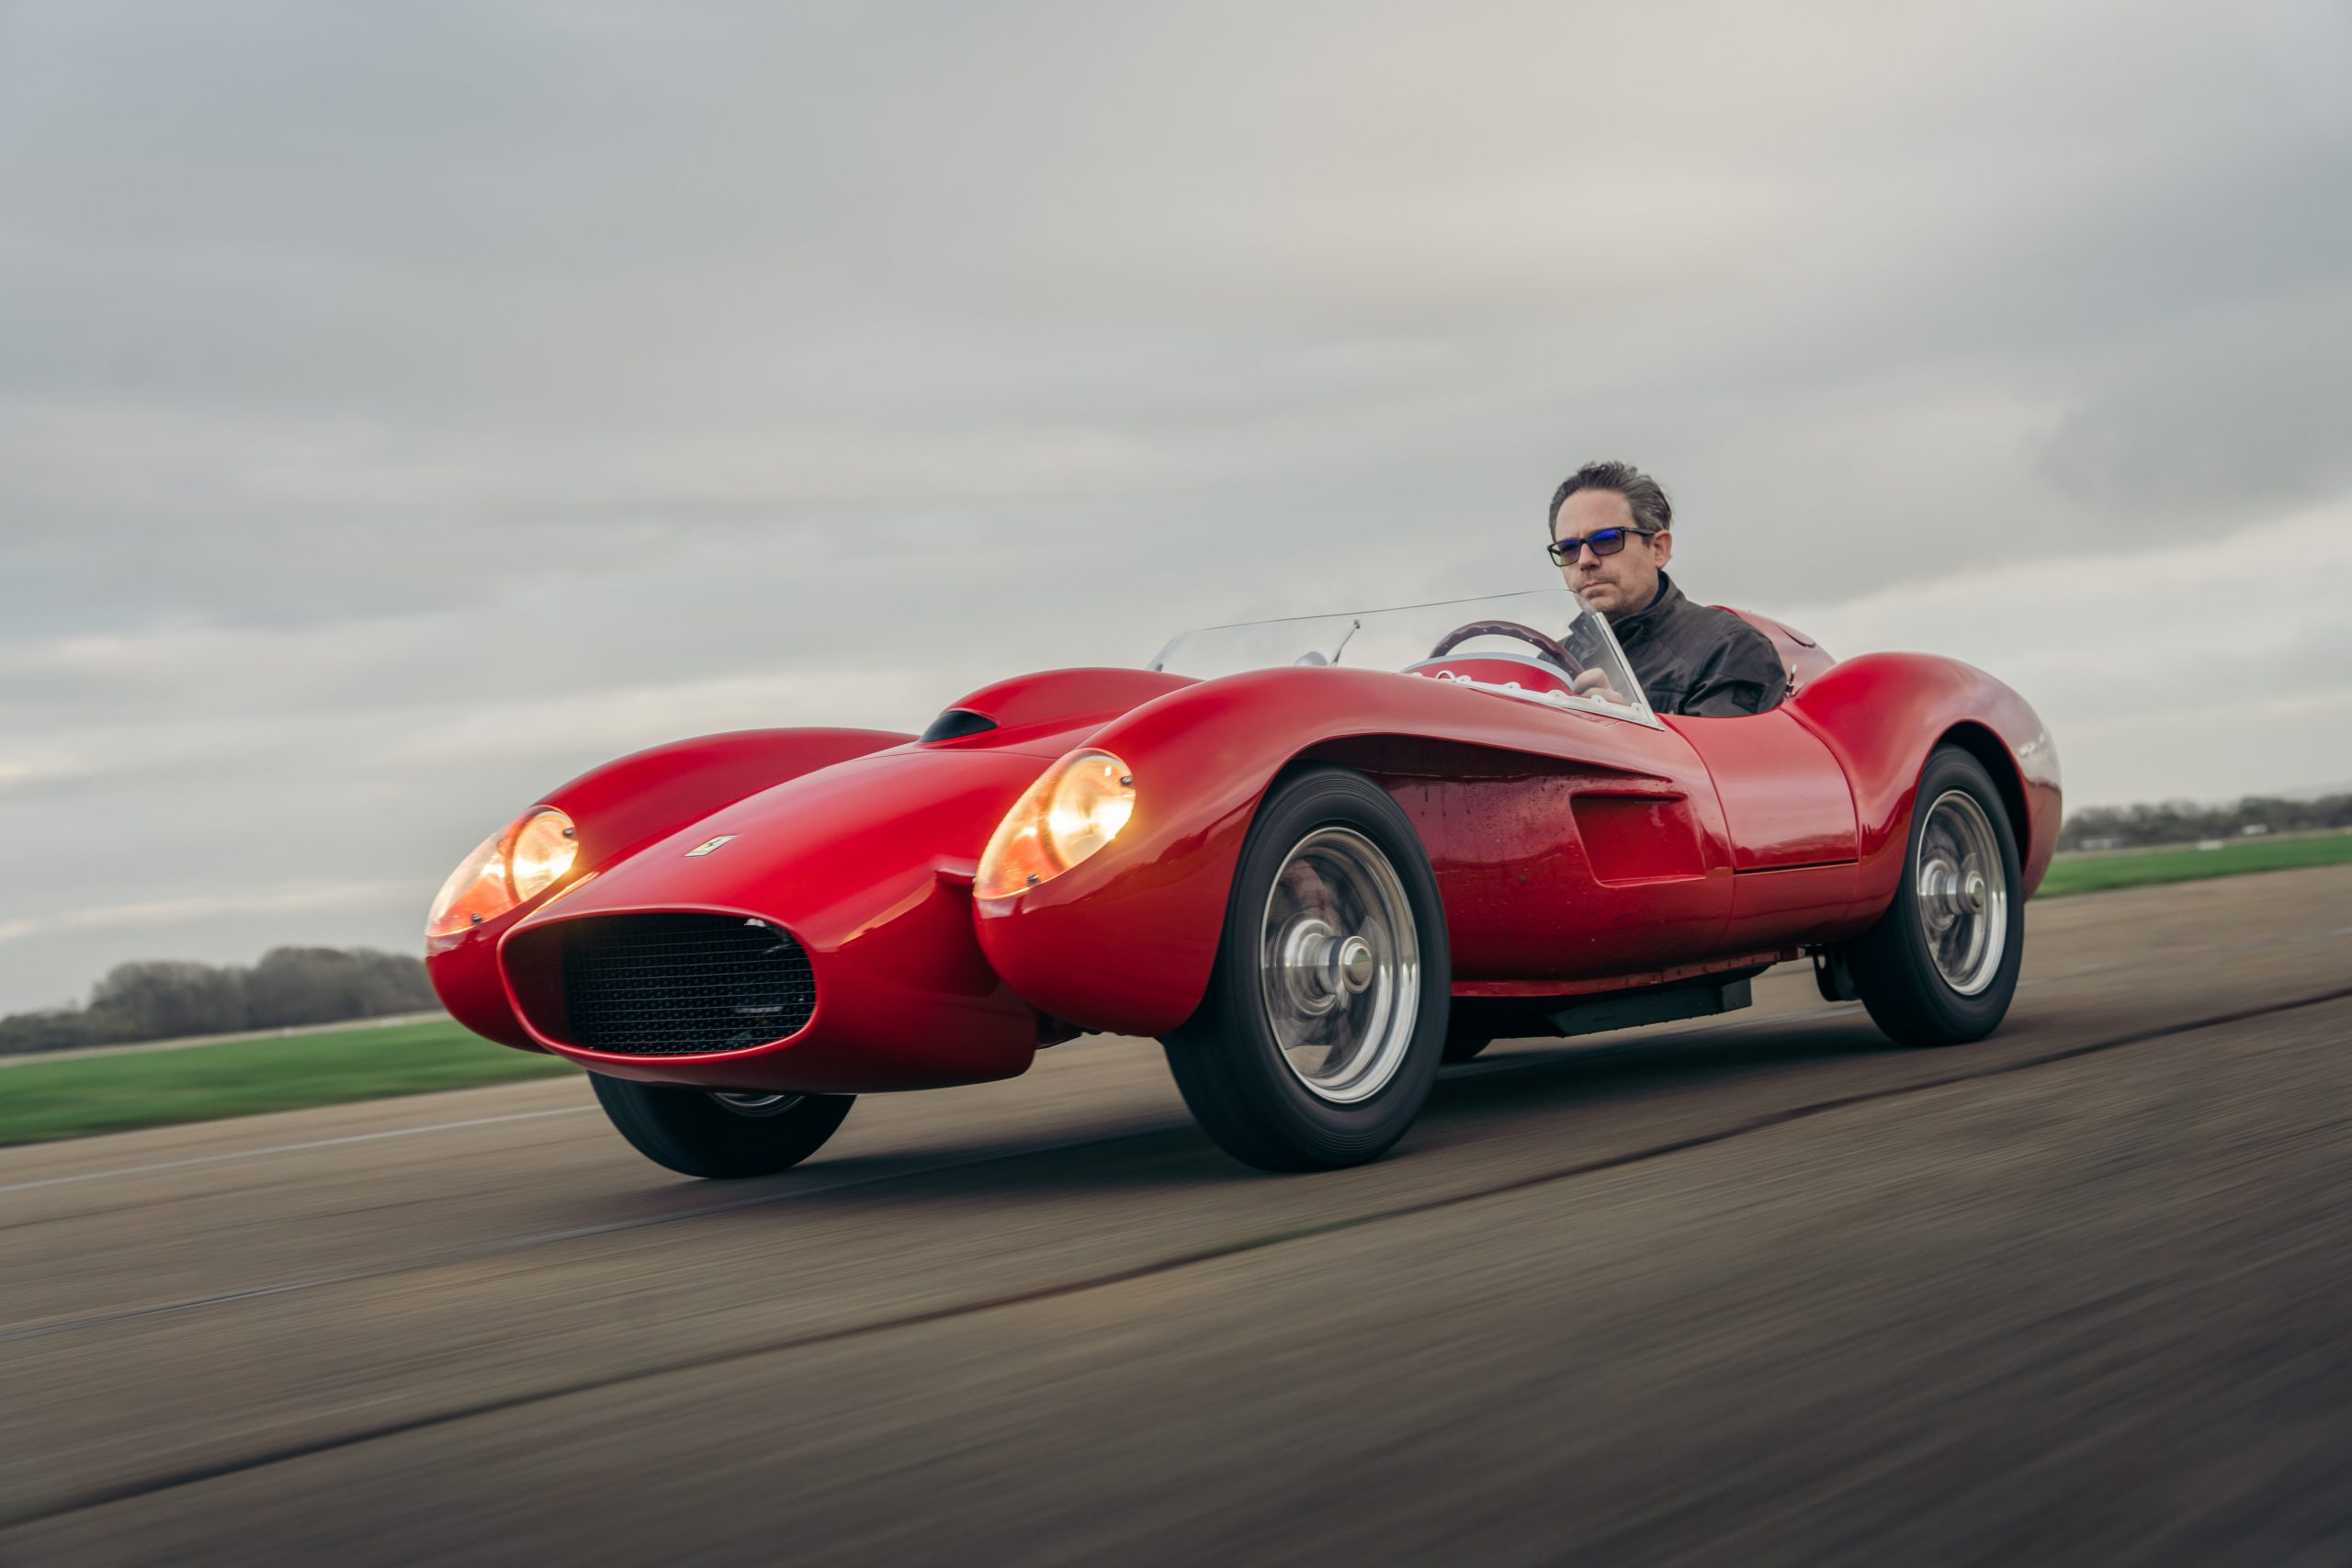 Review: The £80,000 Ferrari Testarossa Junior is definitely no toy